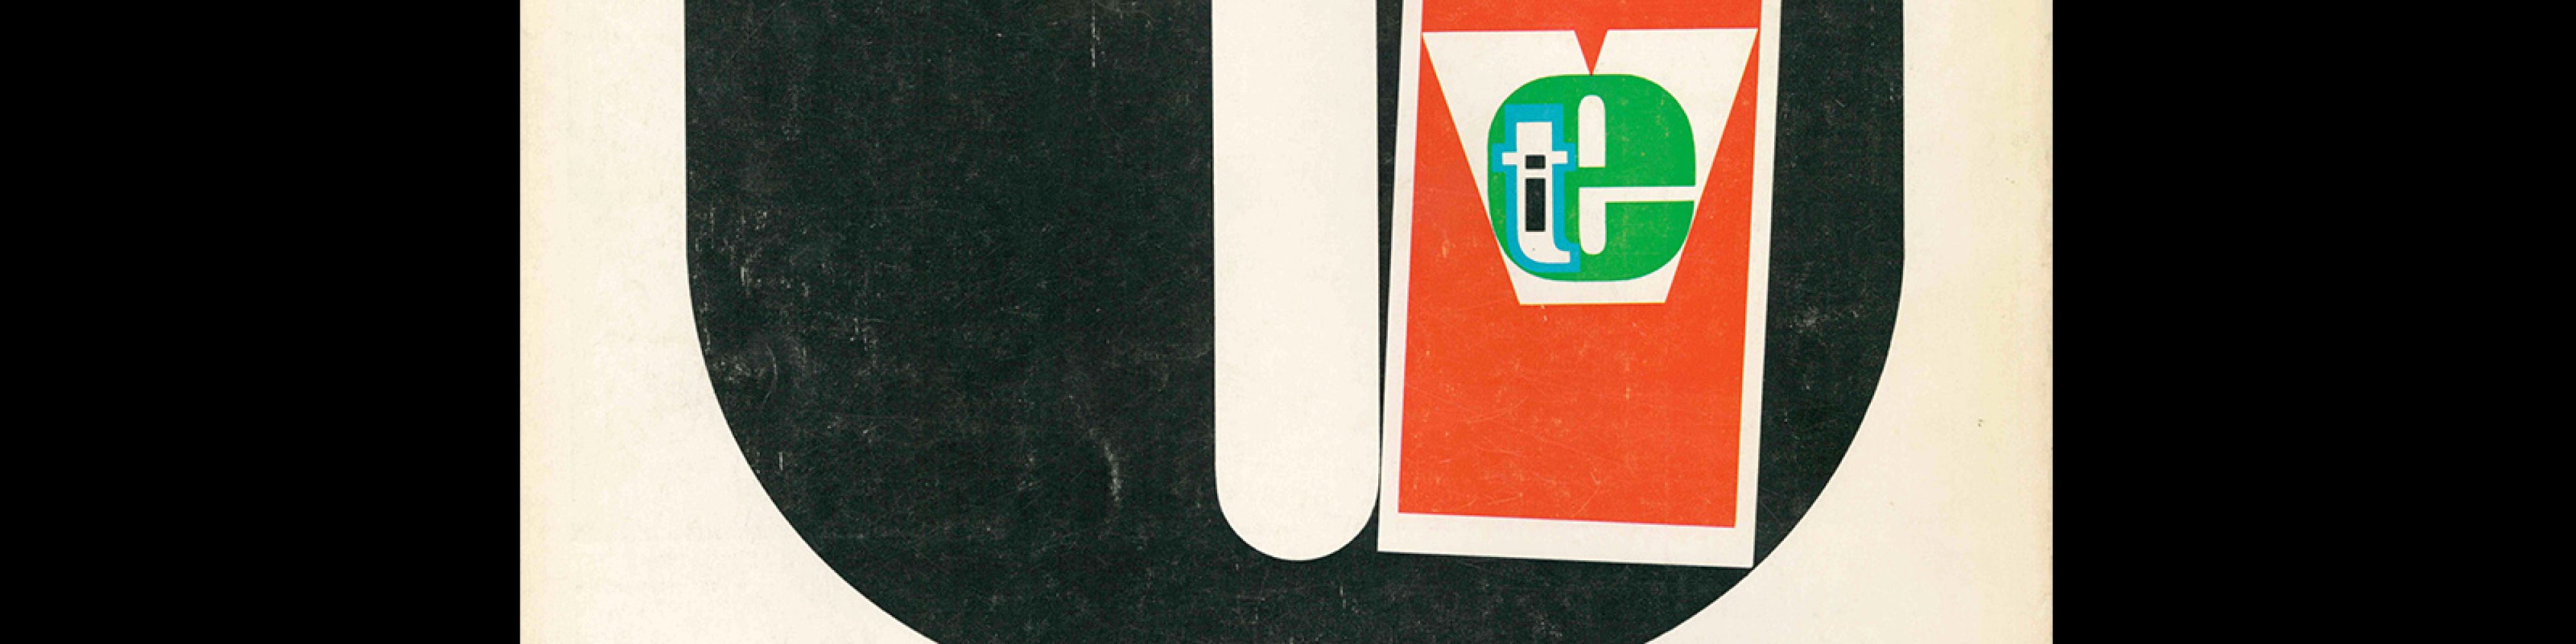 Olivetti, advertisement, 1962. Designed by Giovanni Pintori,